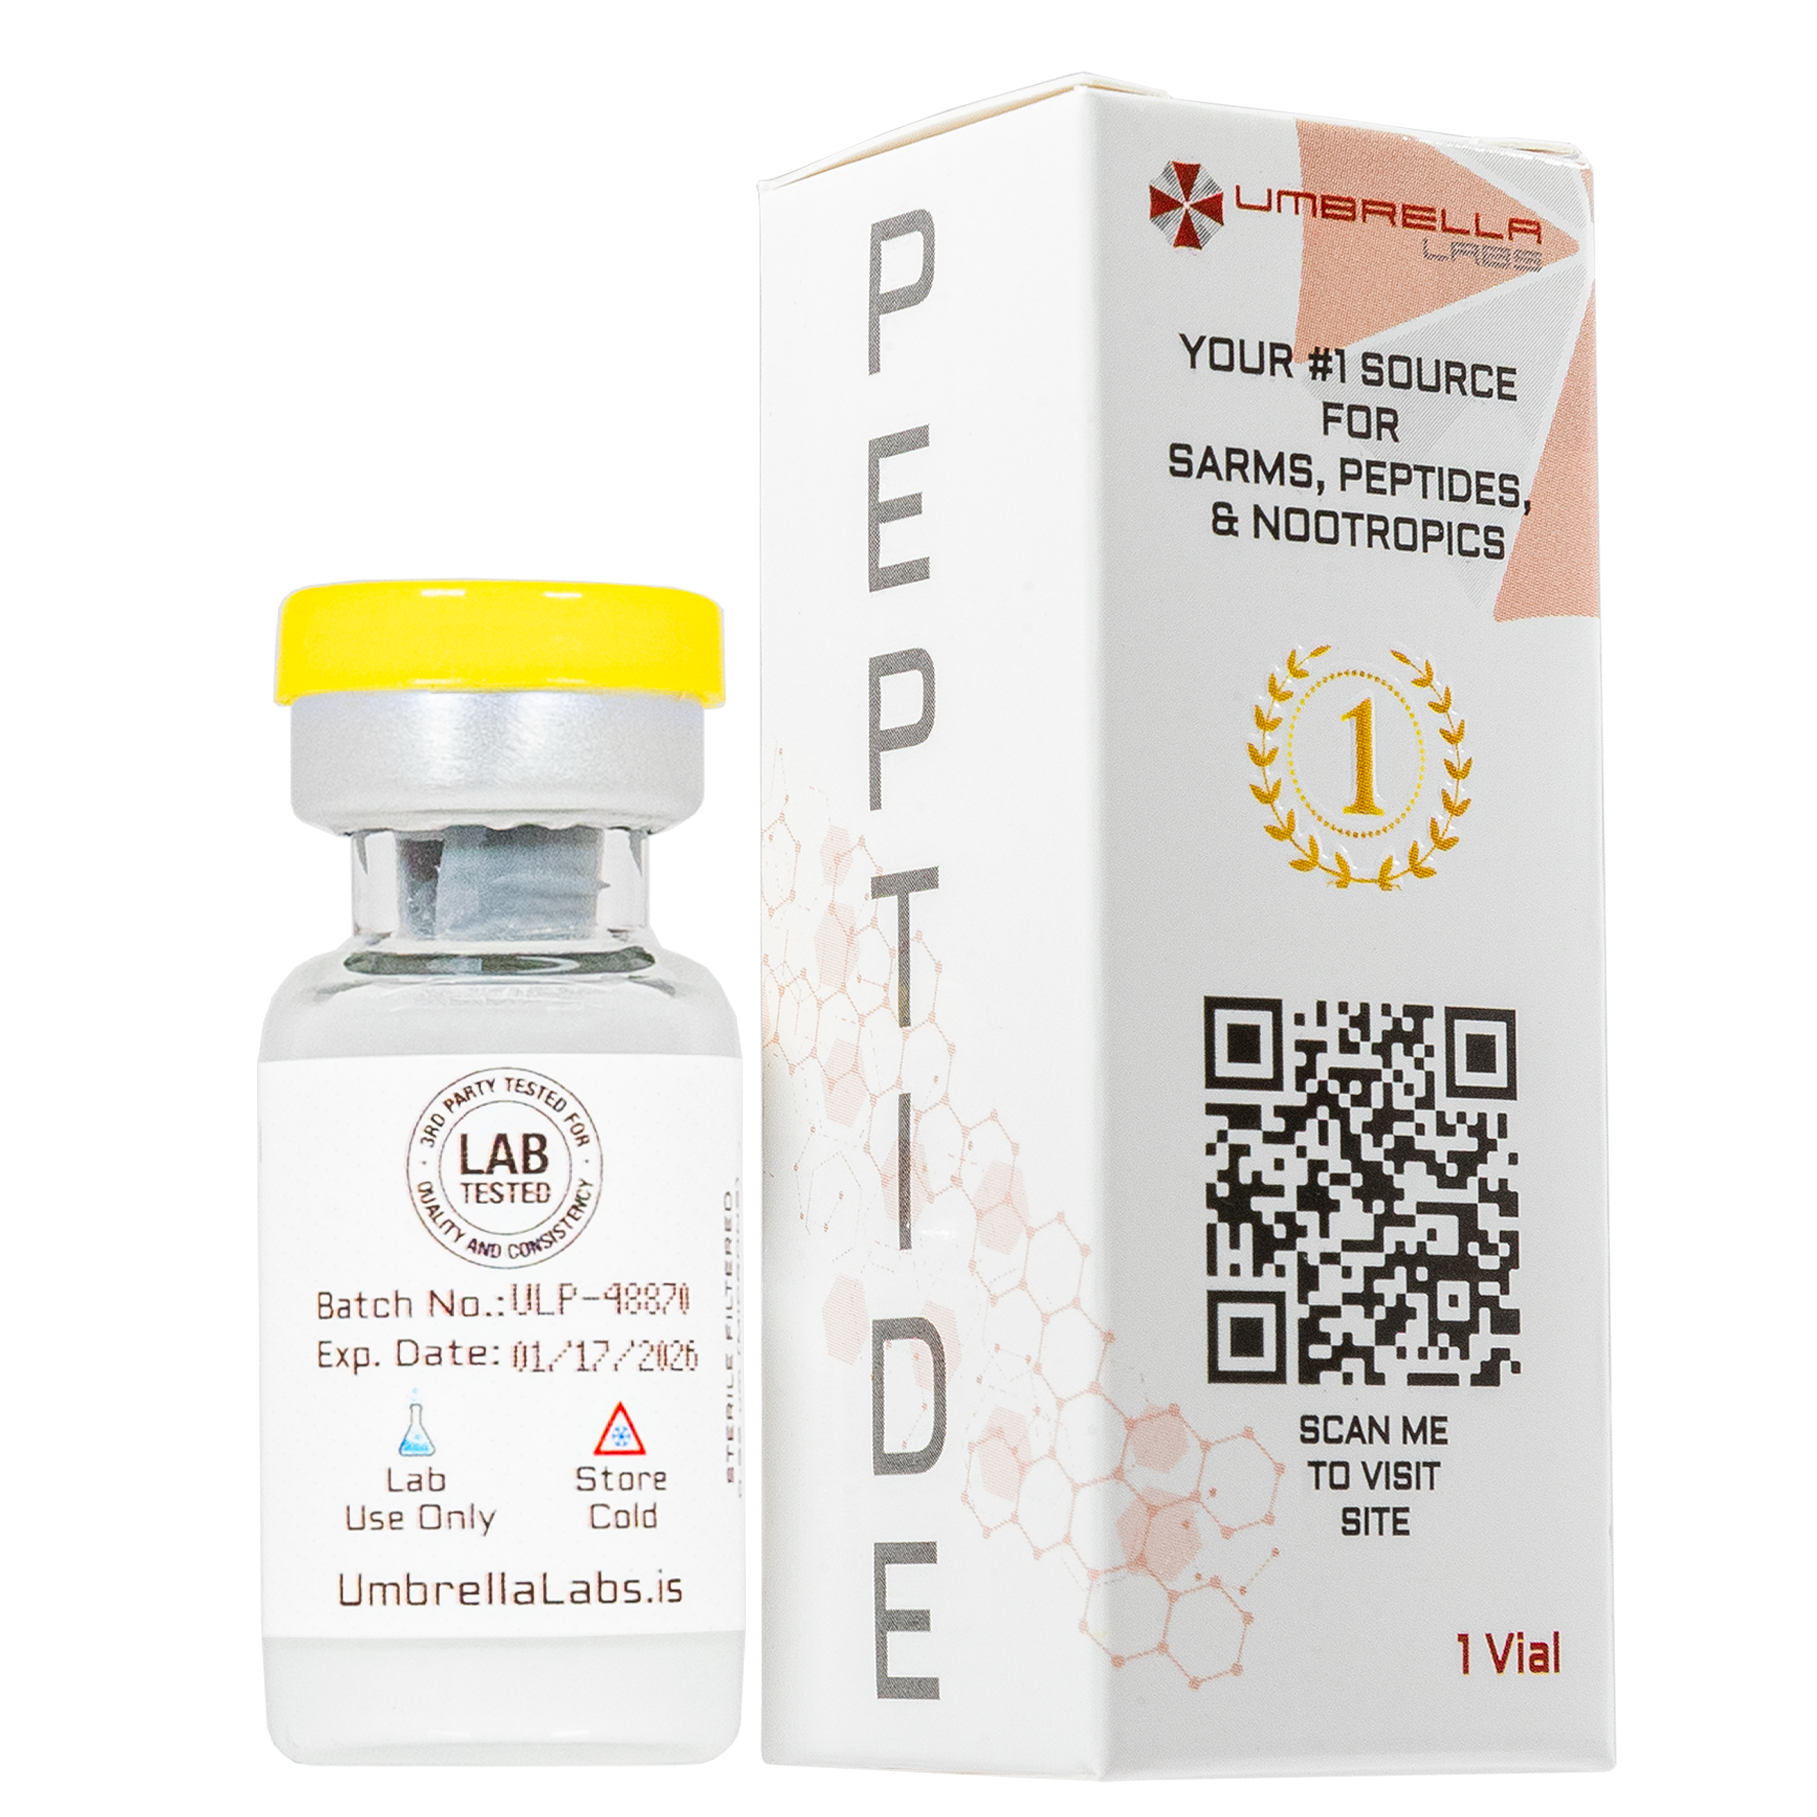 cjc 1295 (no dac)/ipamorelin blend peptide